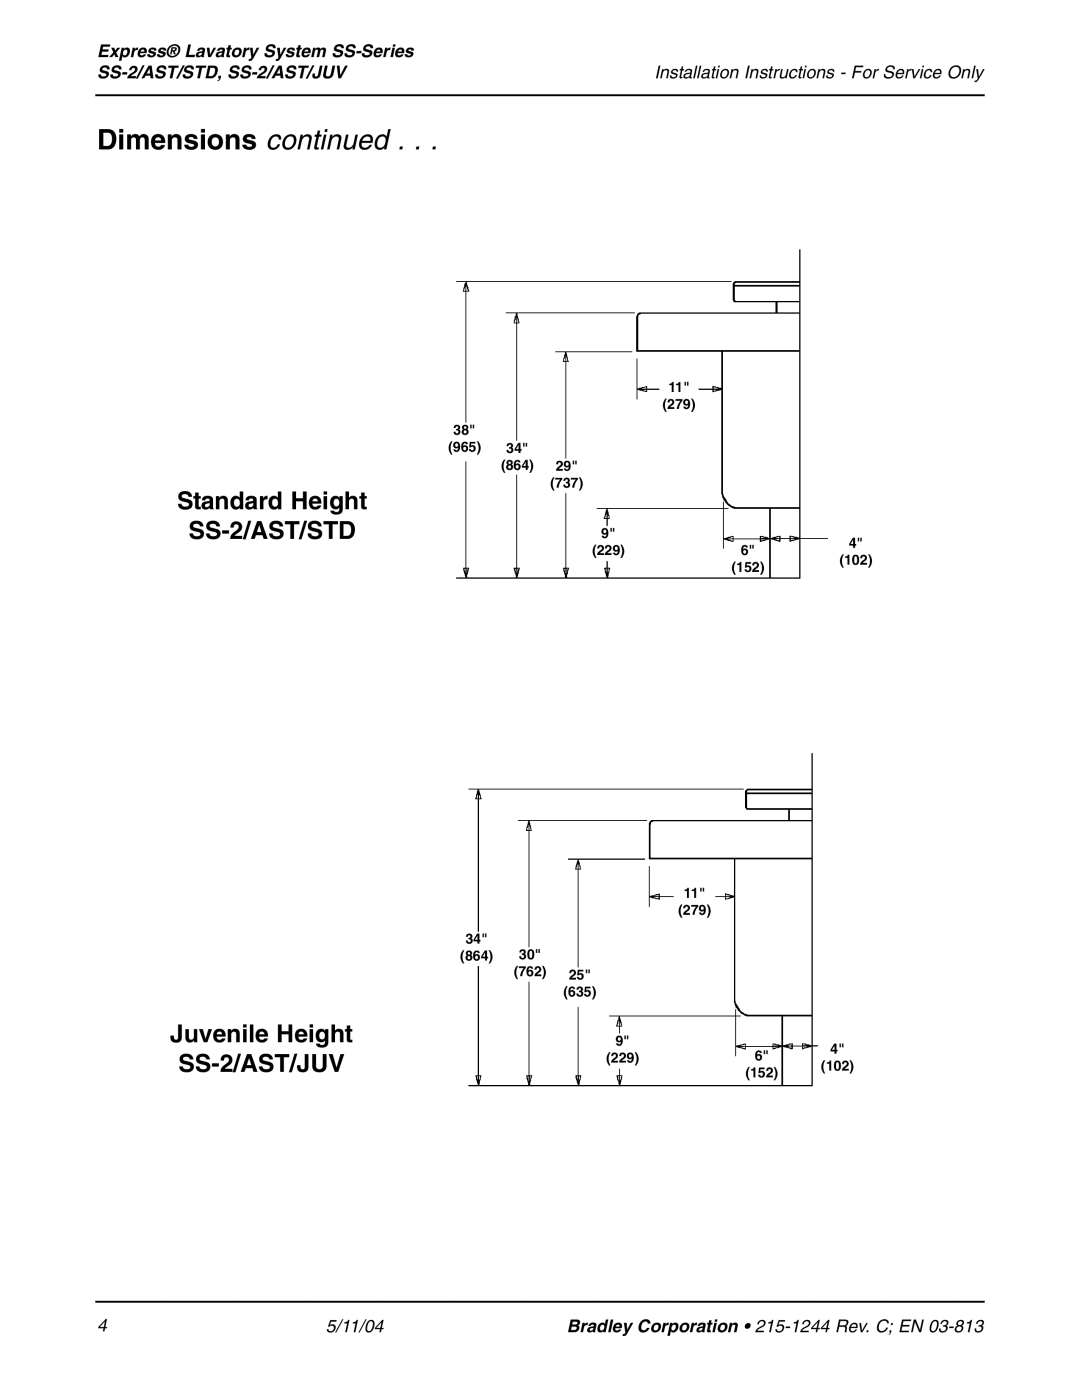 Bradley Smoker SS-2/AST/STD installation instructions Standard Height, Juvenile Height SS-2/AST/JUV 